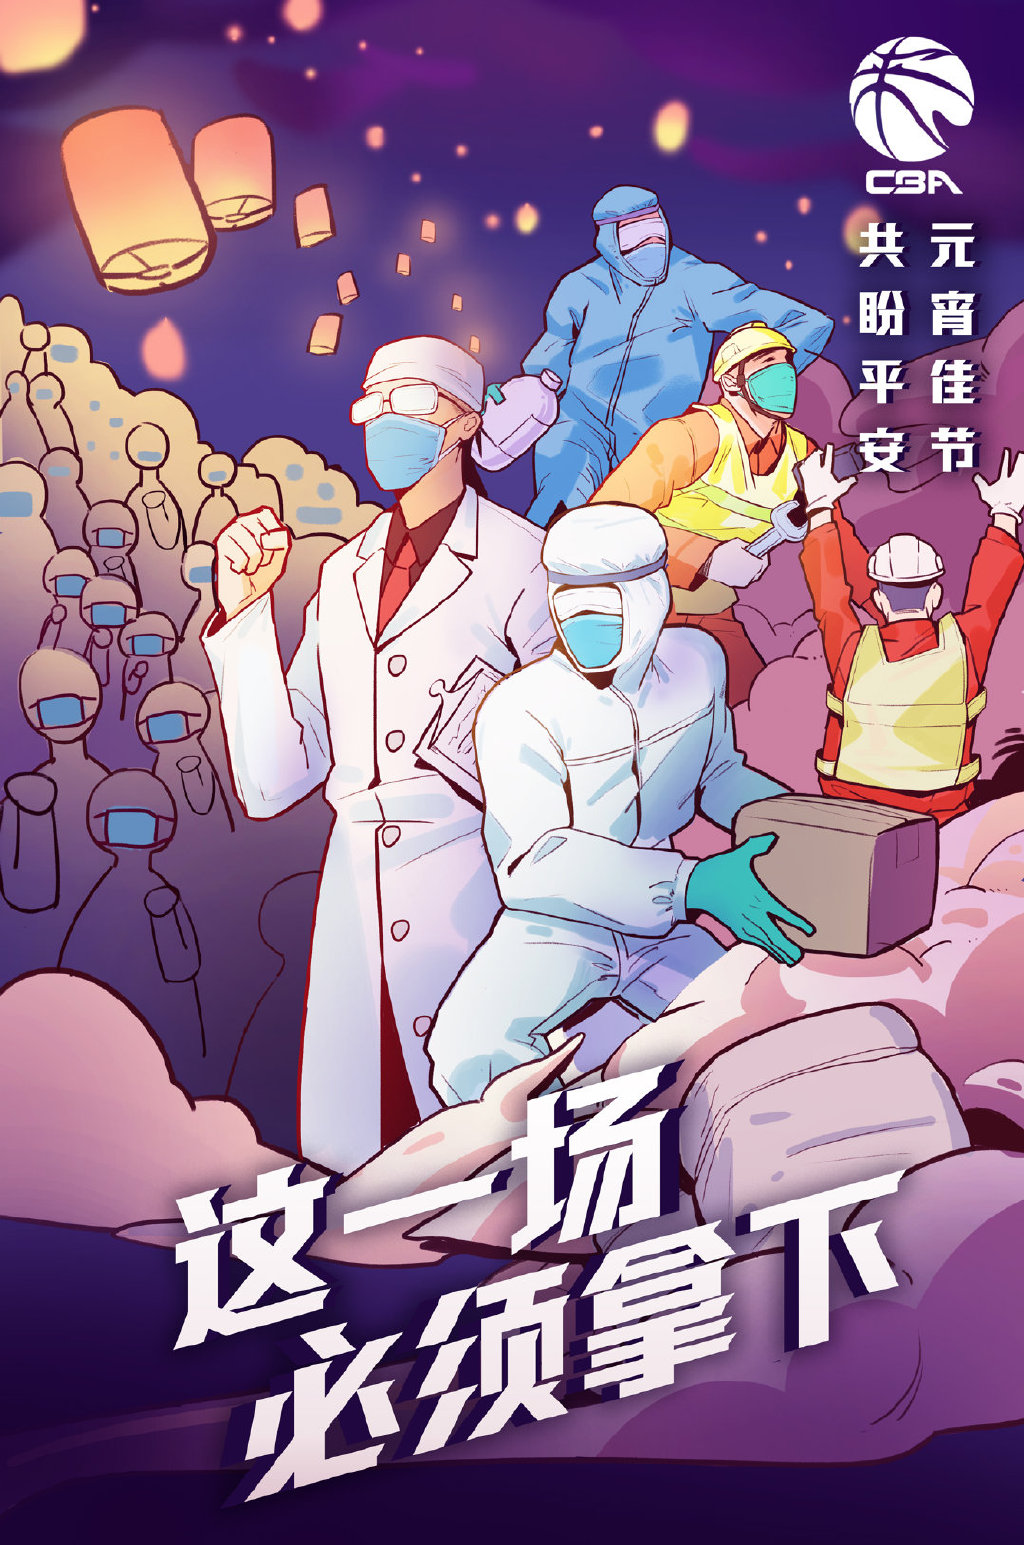 cba公司发布元宵节海报:防疫这一场我们必须拿下!_武汉